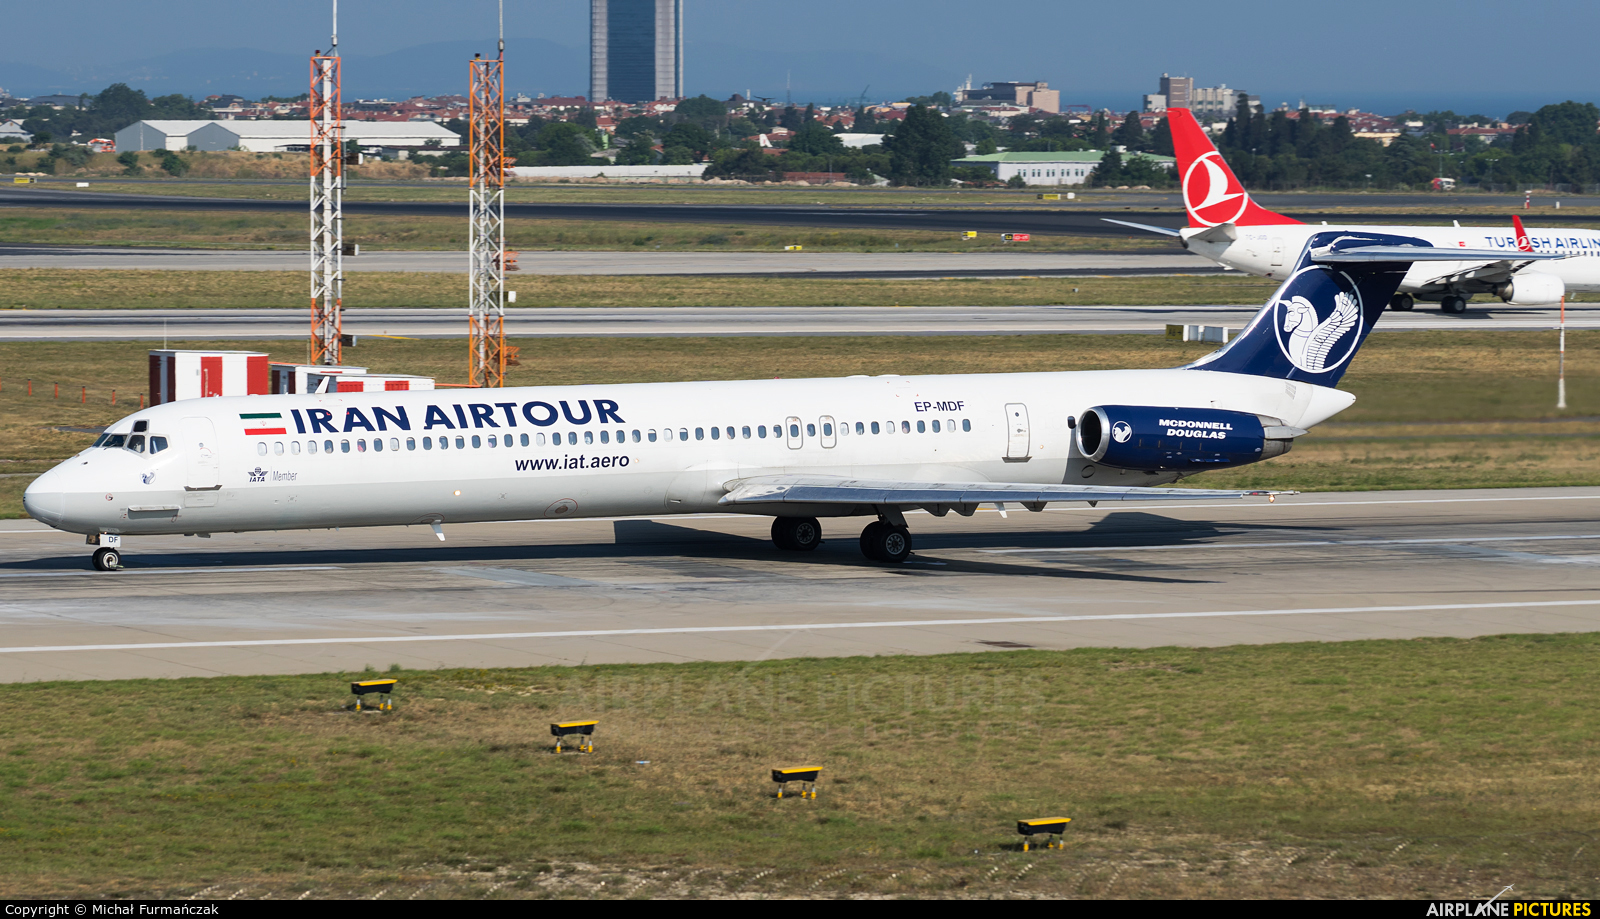 Iran Air Tours EP-MDF aircraft at Istanbul - Ataturk